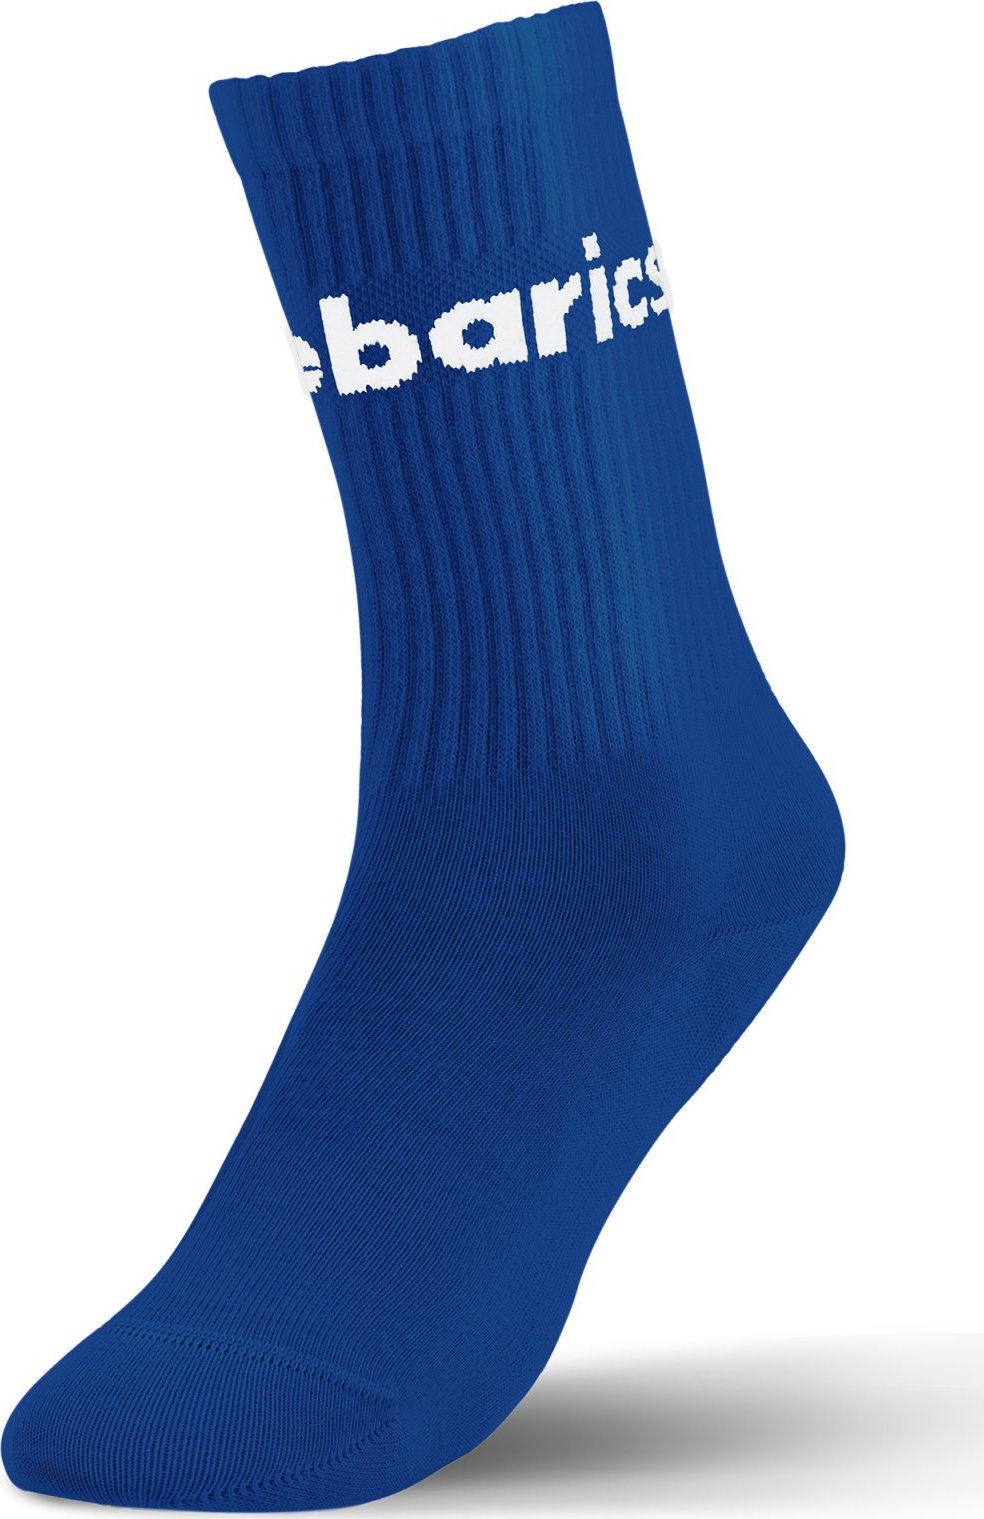 Barefootové ponožky Barebarics Crew modrá Big logo Velikost: 43-46